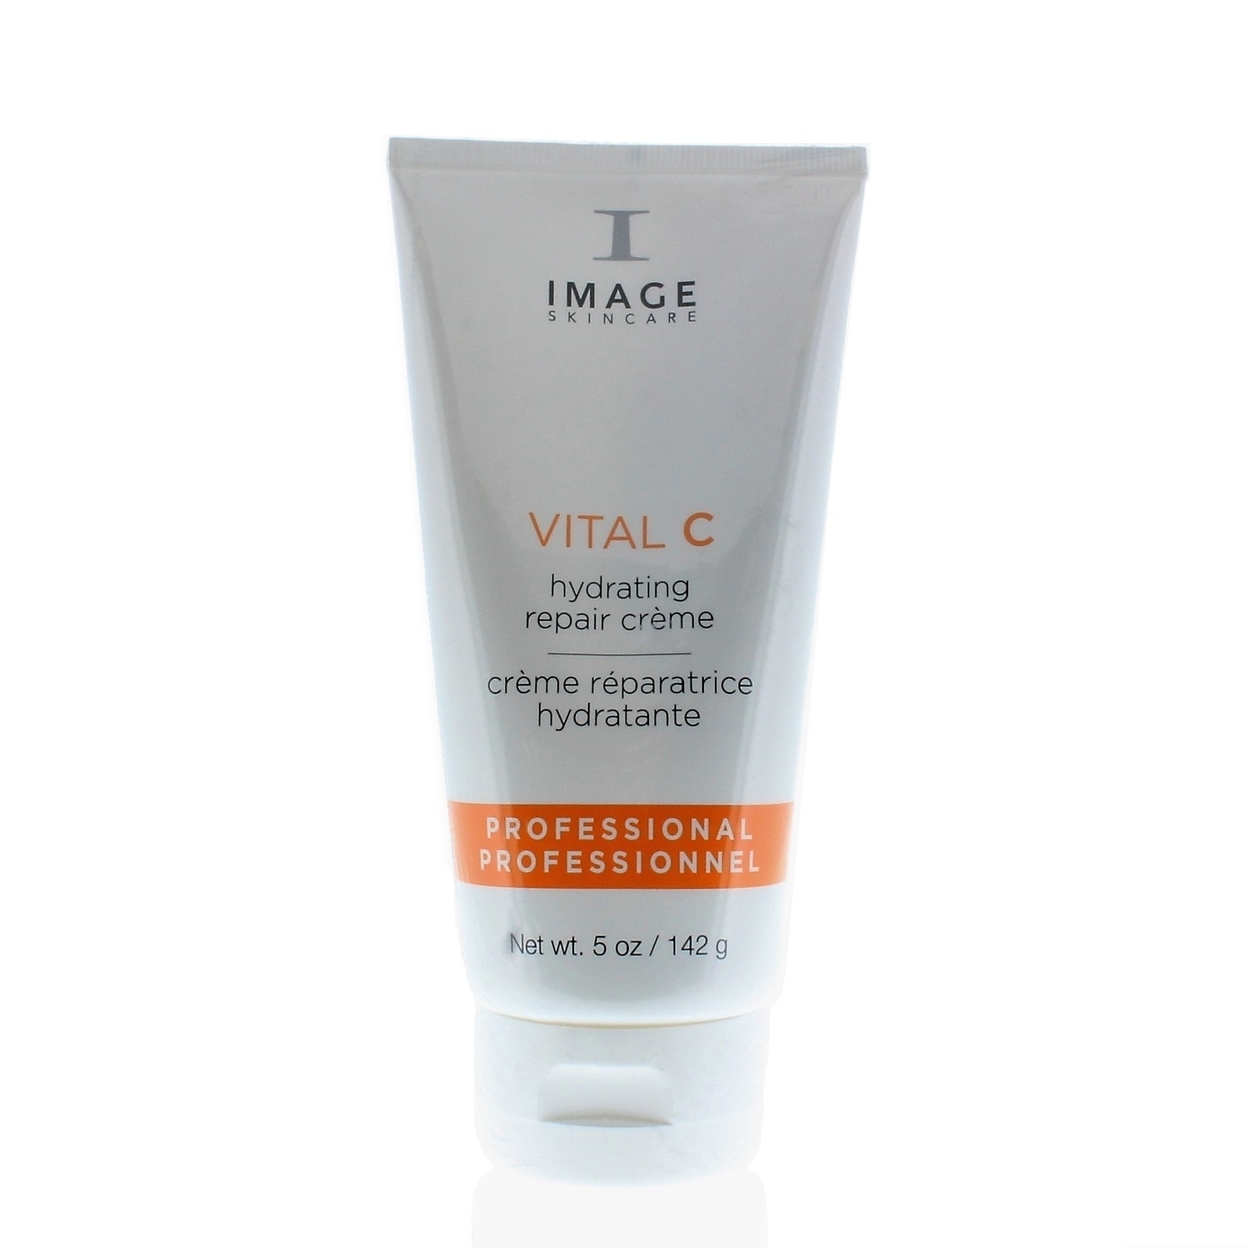 Image Skincare (Pro) Vital C Hydrating Repair Creme 5oz/142g